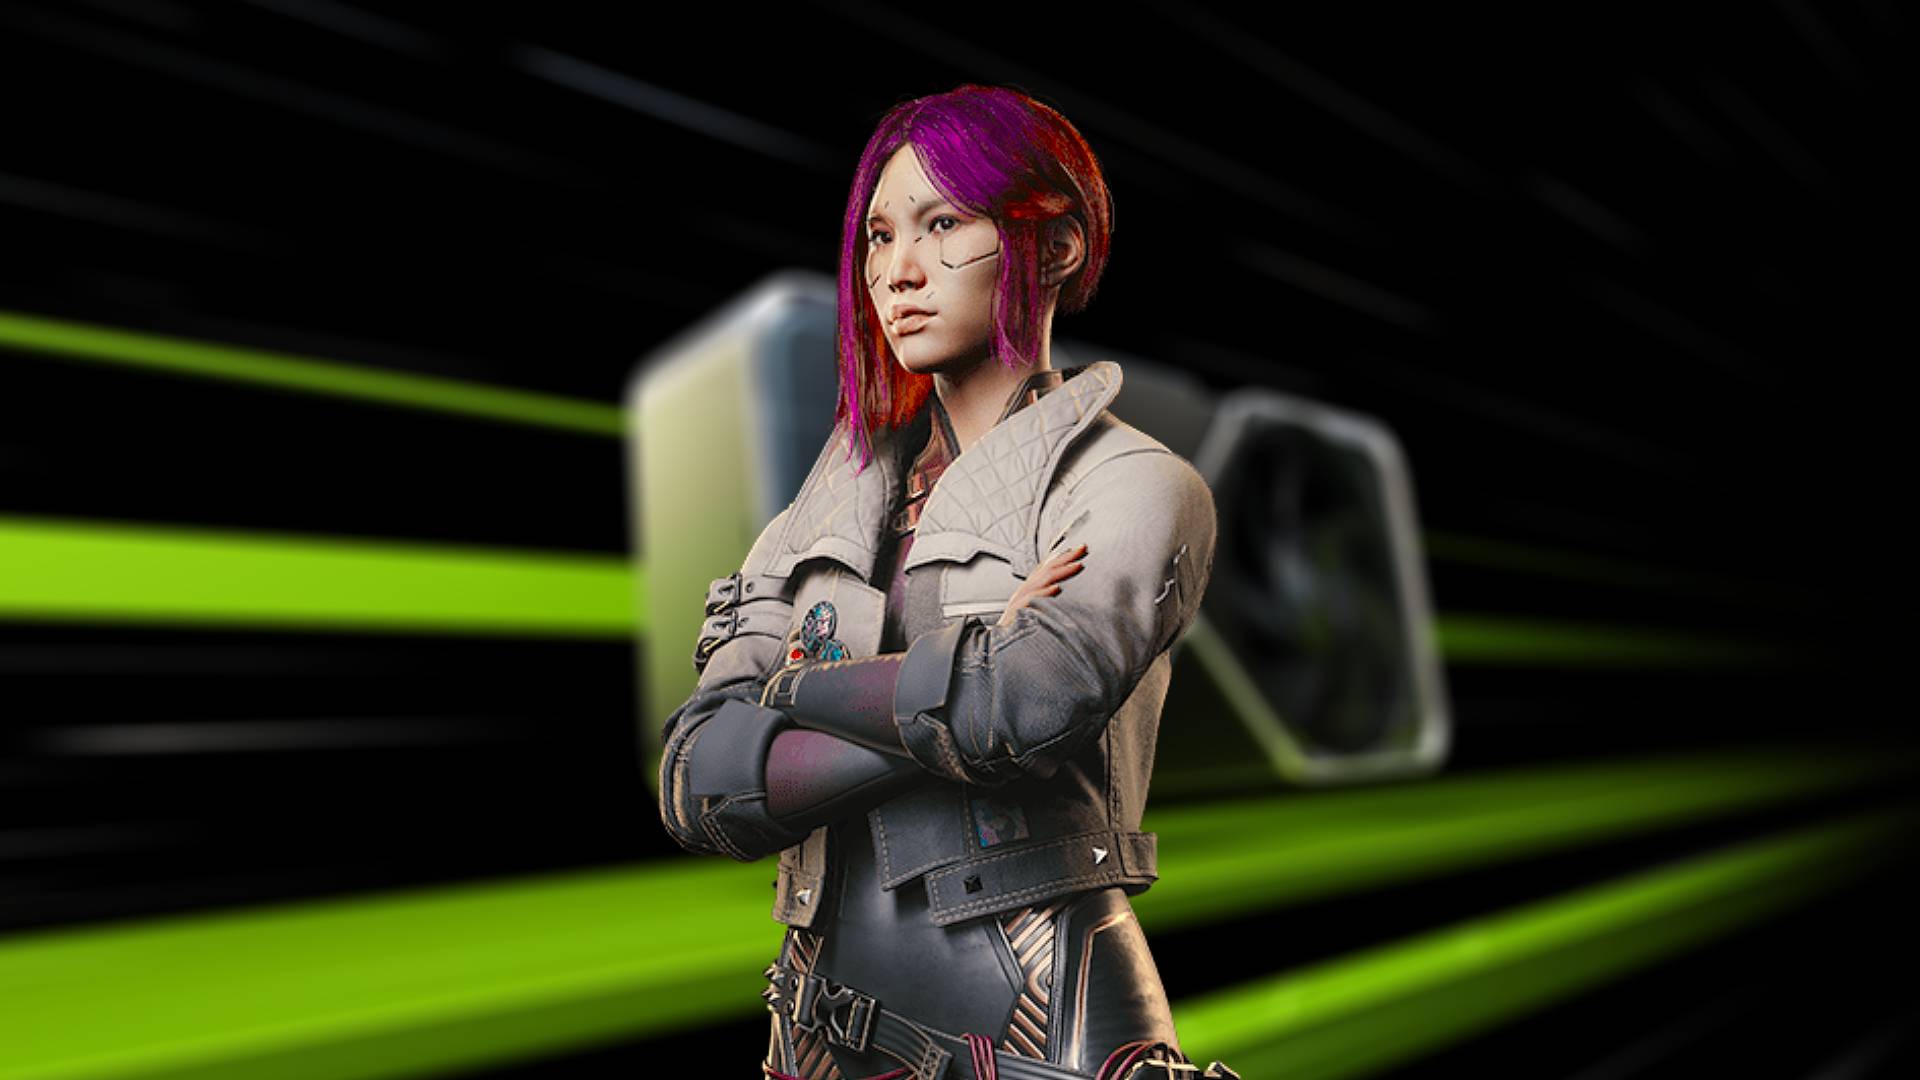 Red Hair Woman Cosplay Cyberpunk 4K HD Cyberpunk 2077 Wallpapers, HD  Wallpapers